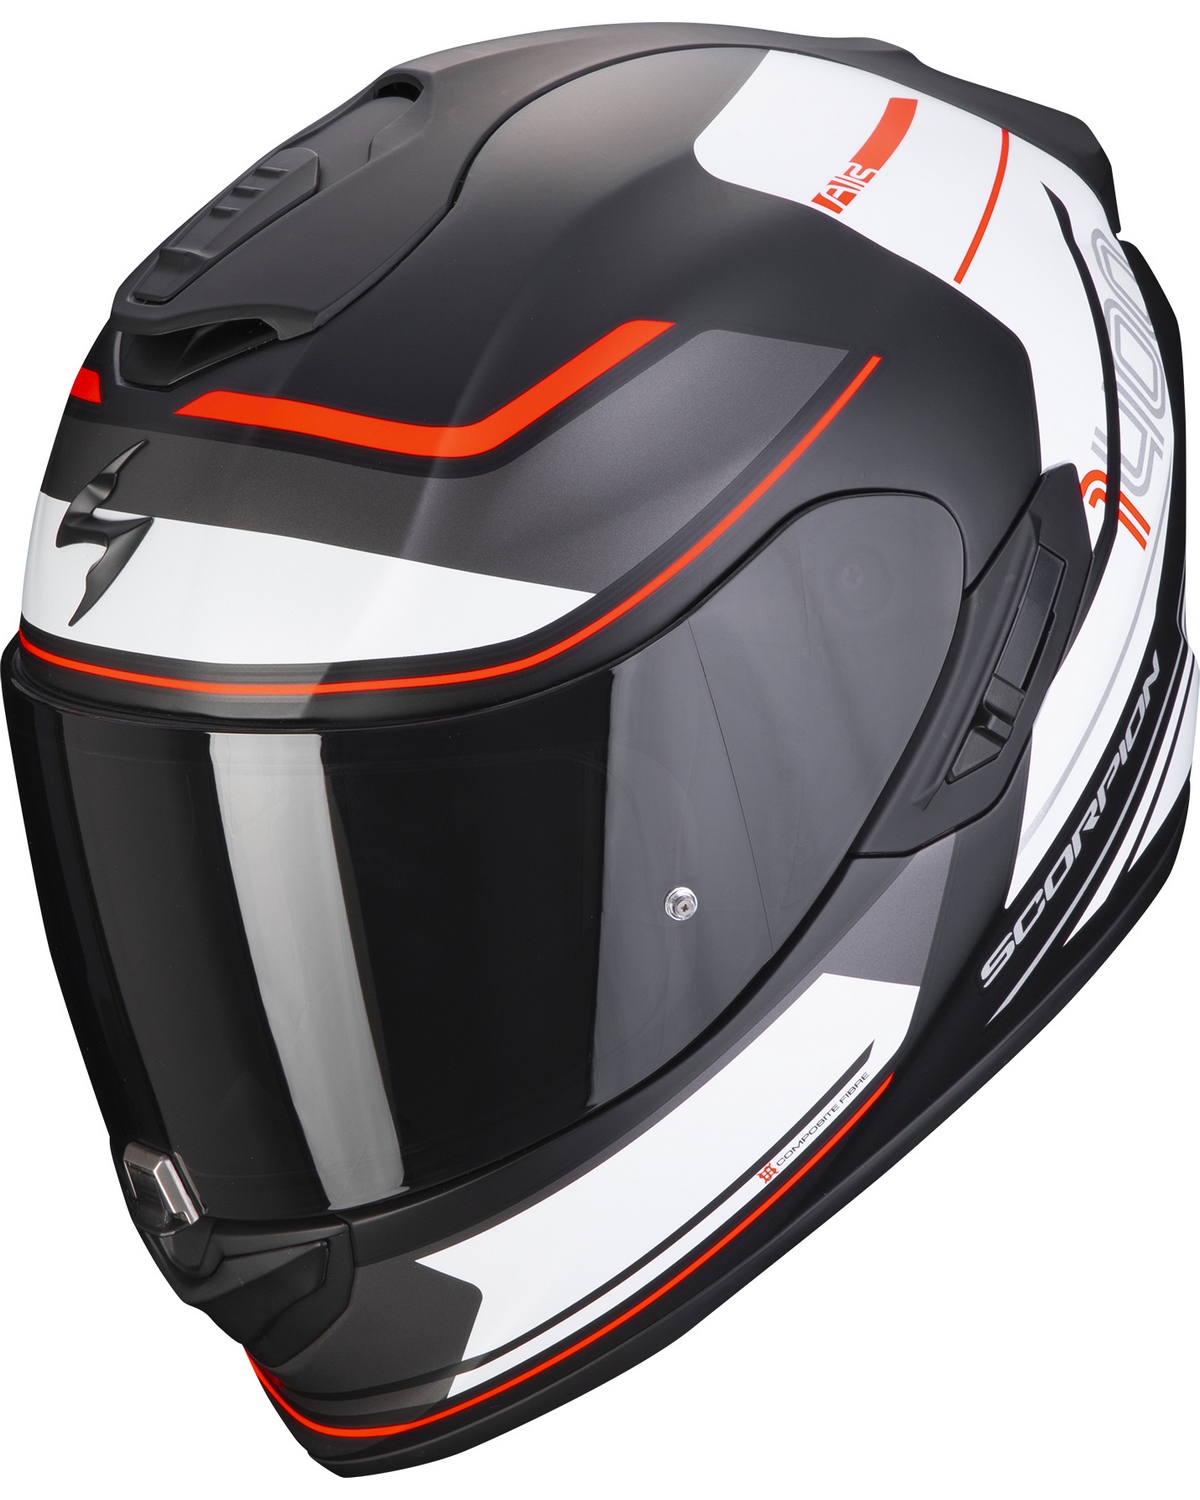 Casque Intégral Moto Scorpion Exo Exo-1400 Evo Air Shell - Livraison  Offerte 